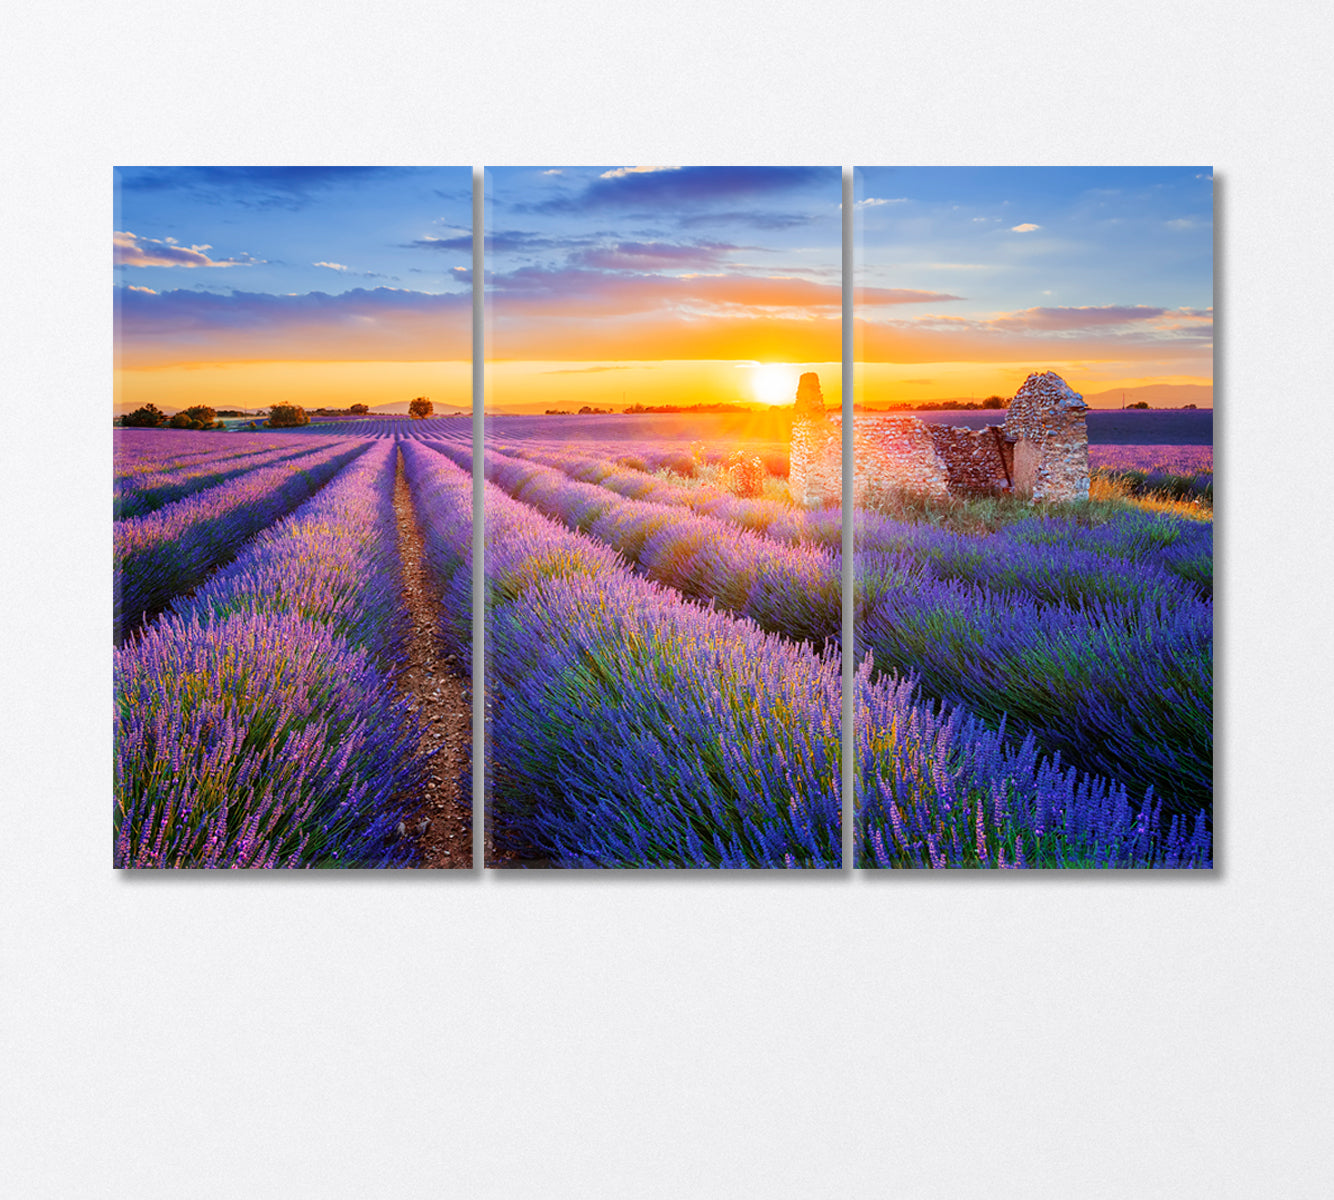 Sunset Over Lavender Field Canvas Print-Canvas Print-CetArt-3 Panels-36x24 inches-CetArt